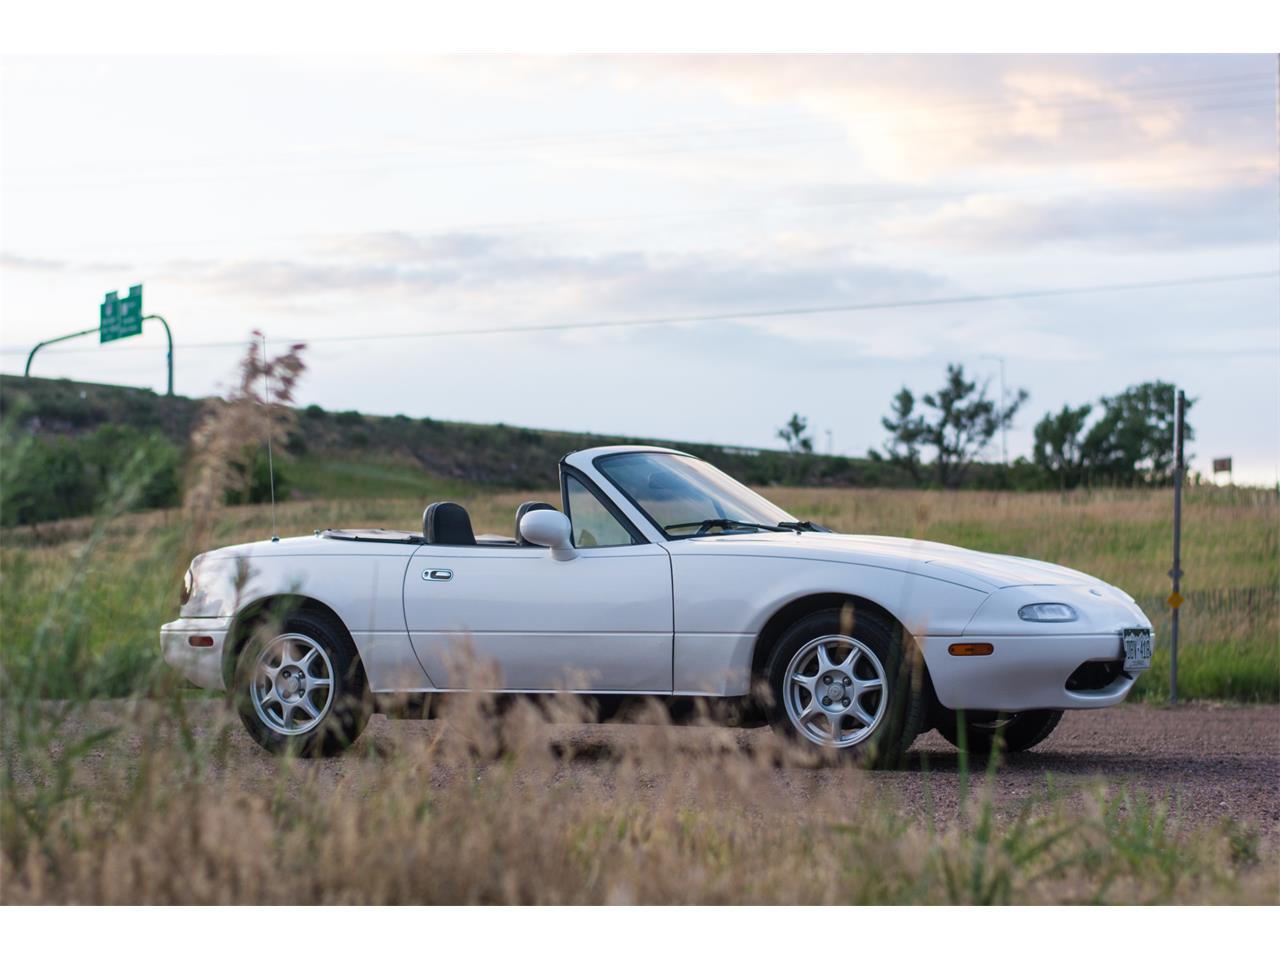 For Sale at Auction: 1997 Mazda Miata for sale in Morrison, CO